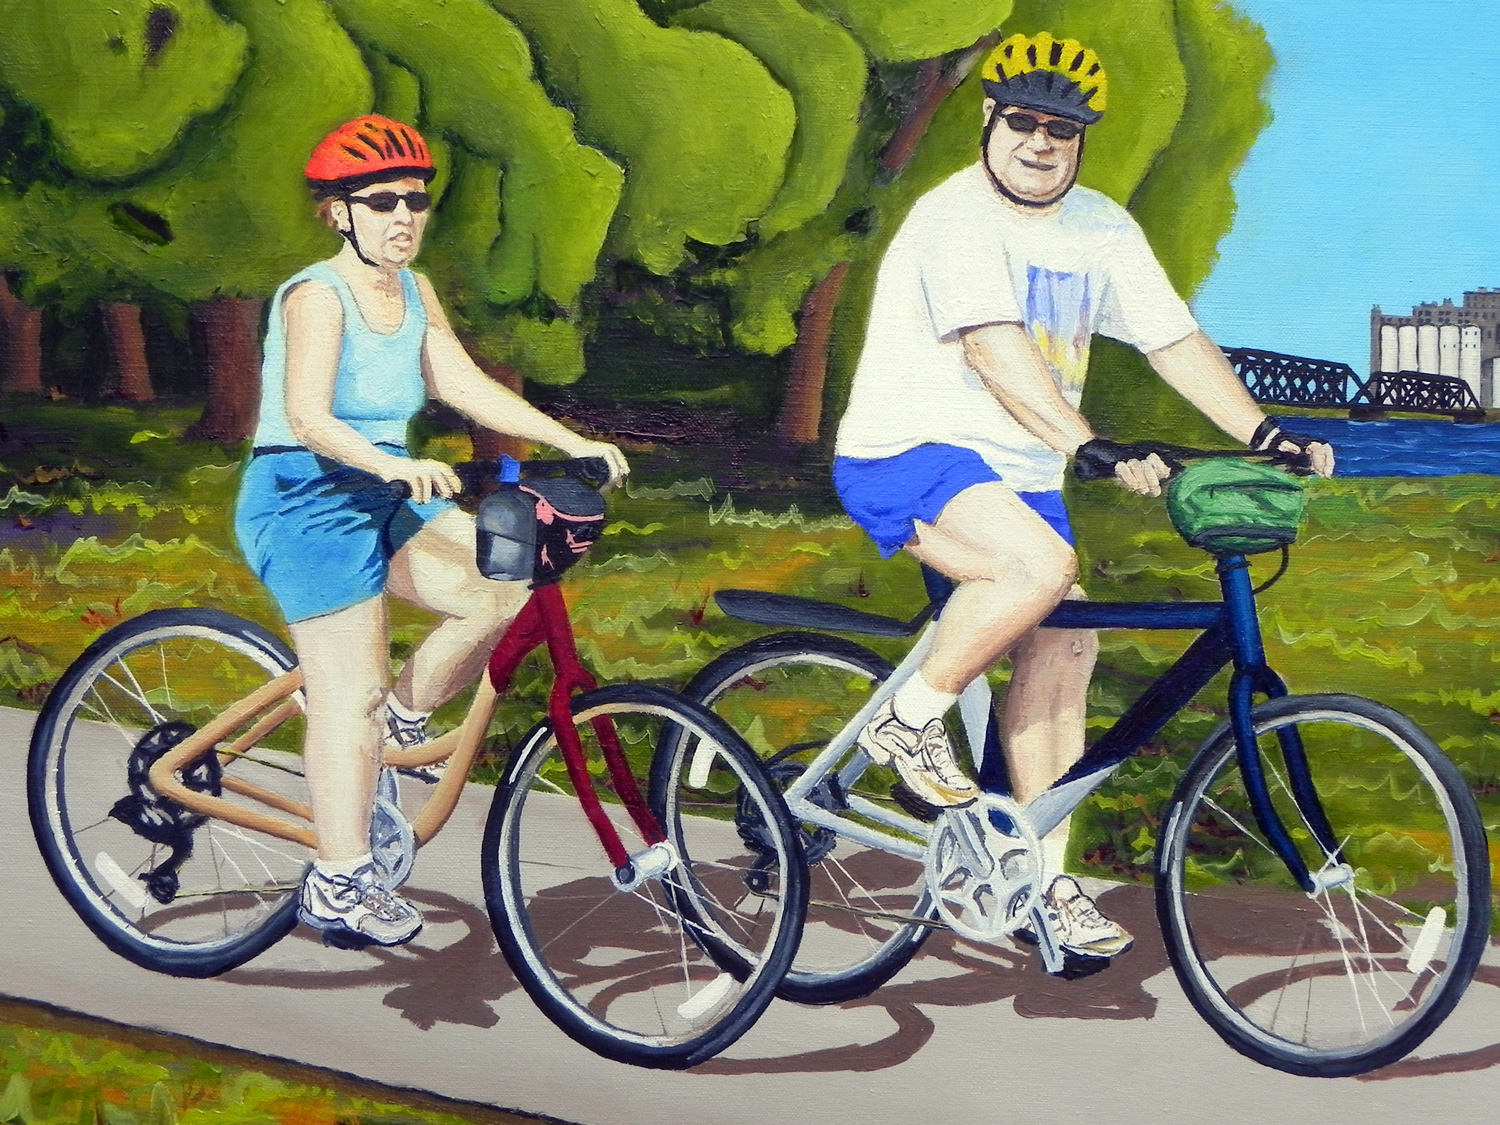 Joe & Marlene oil painting, by Billy Reiter